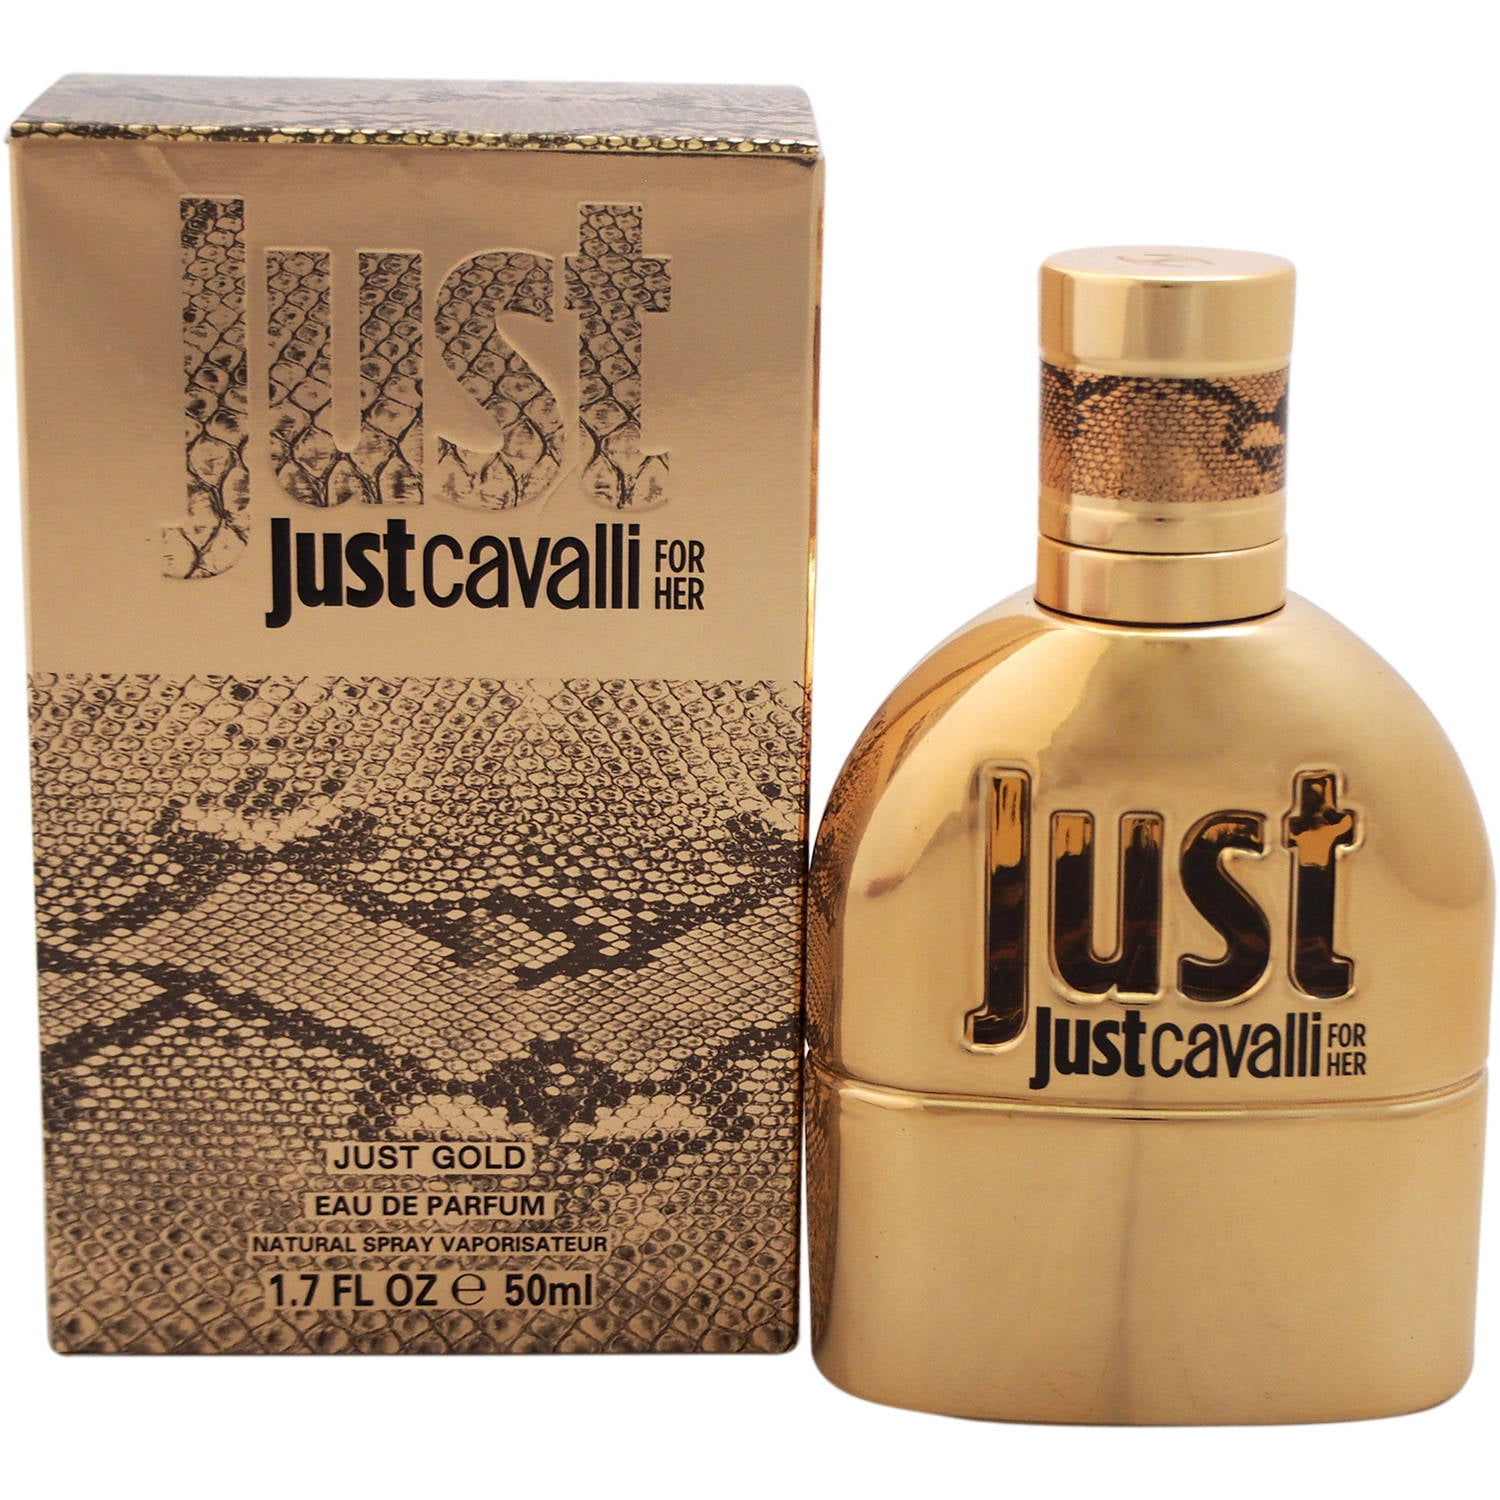 Just Cavalli I Love Her Roberto Cavalli perfume - a fragrance for women 2010